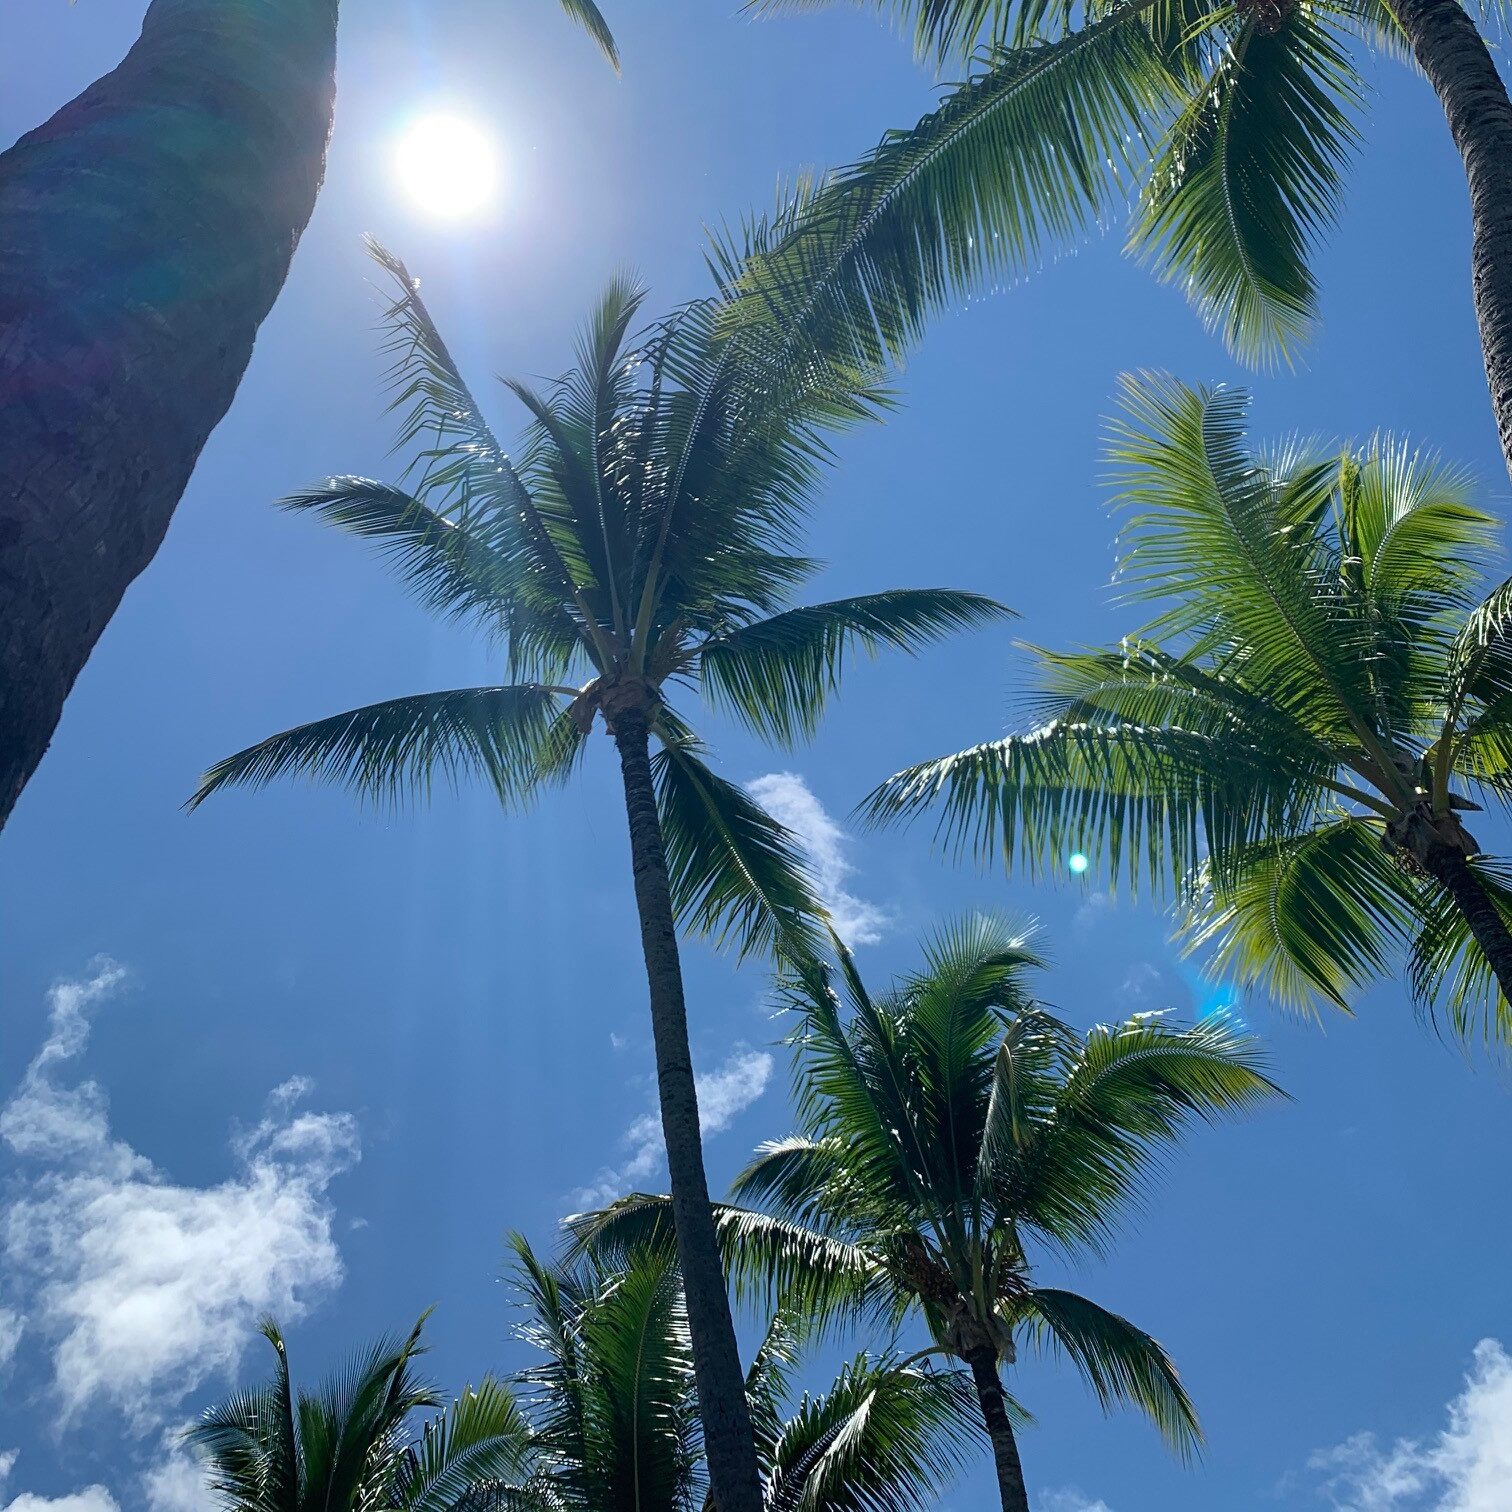 Buy Exclusive Luxury Hawaii Properties | Homes, Land, and Resorts for Sale on Big Island